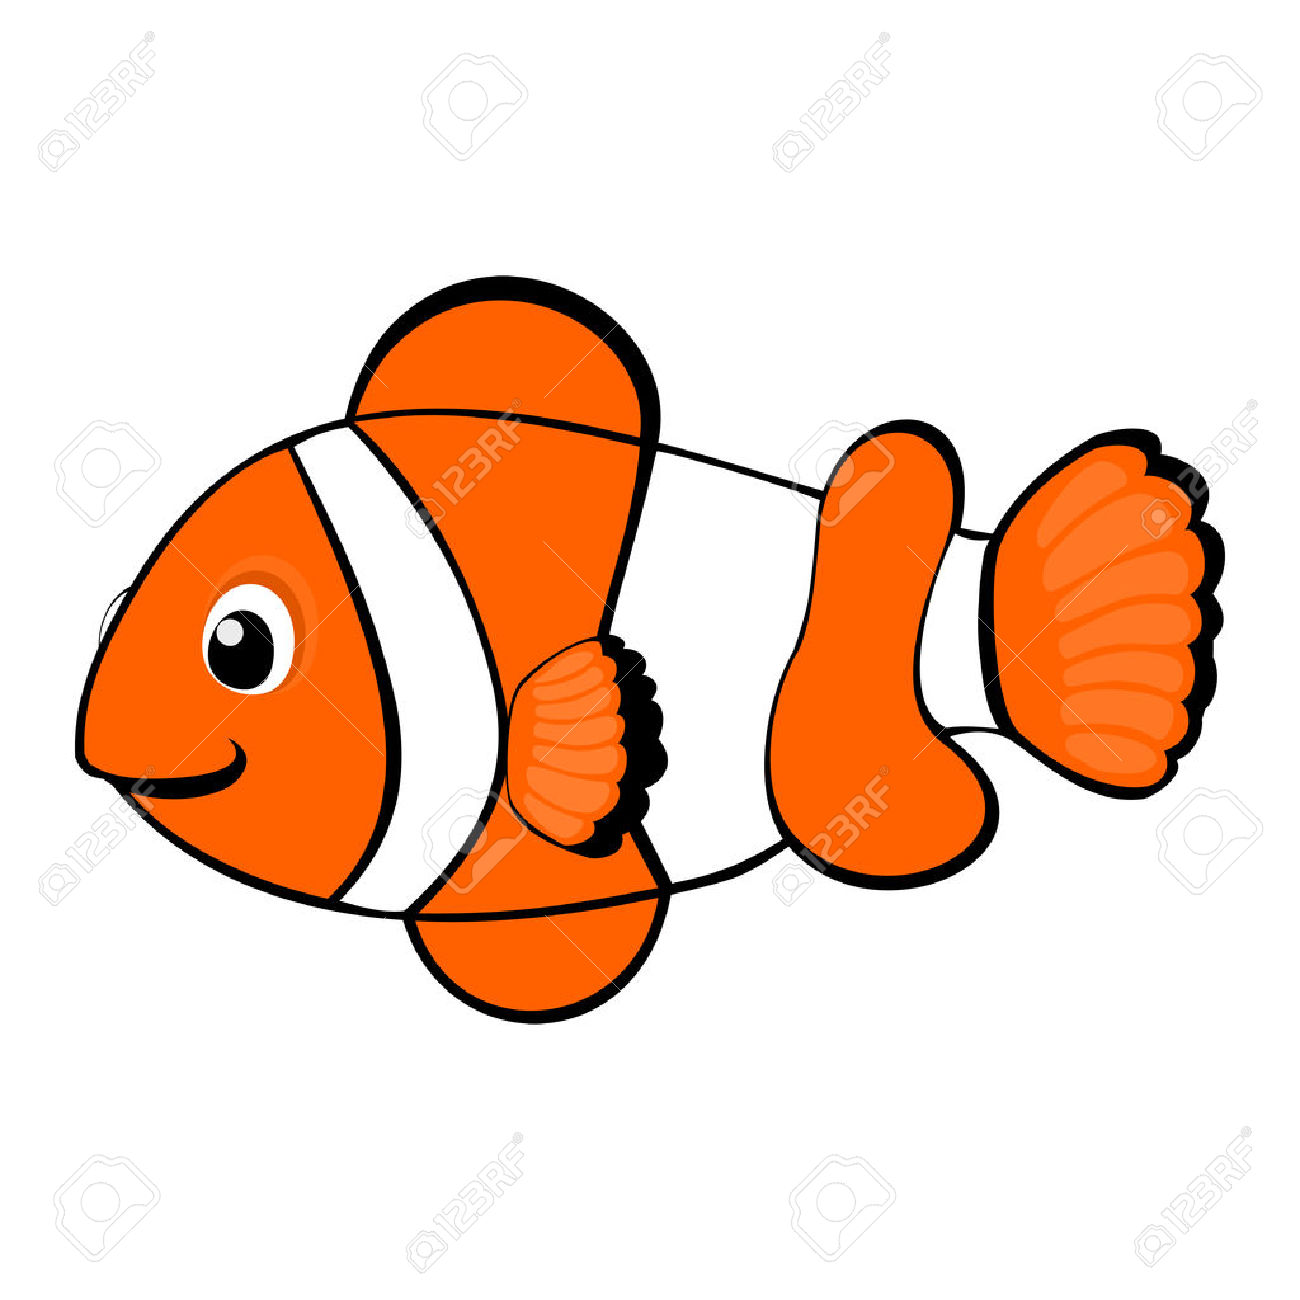 clip art of clown fish - photo #17